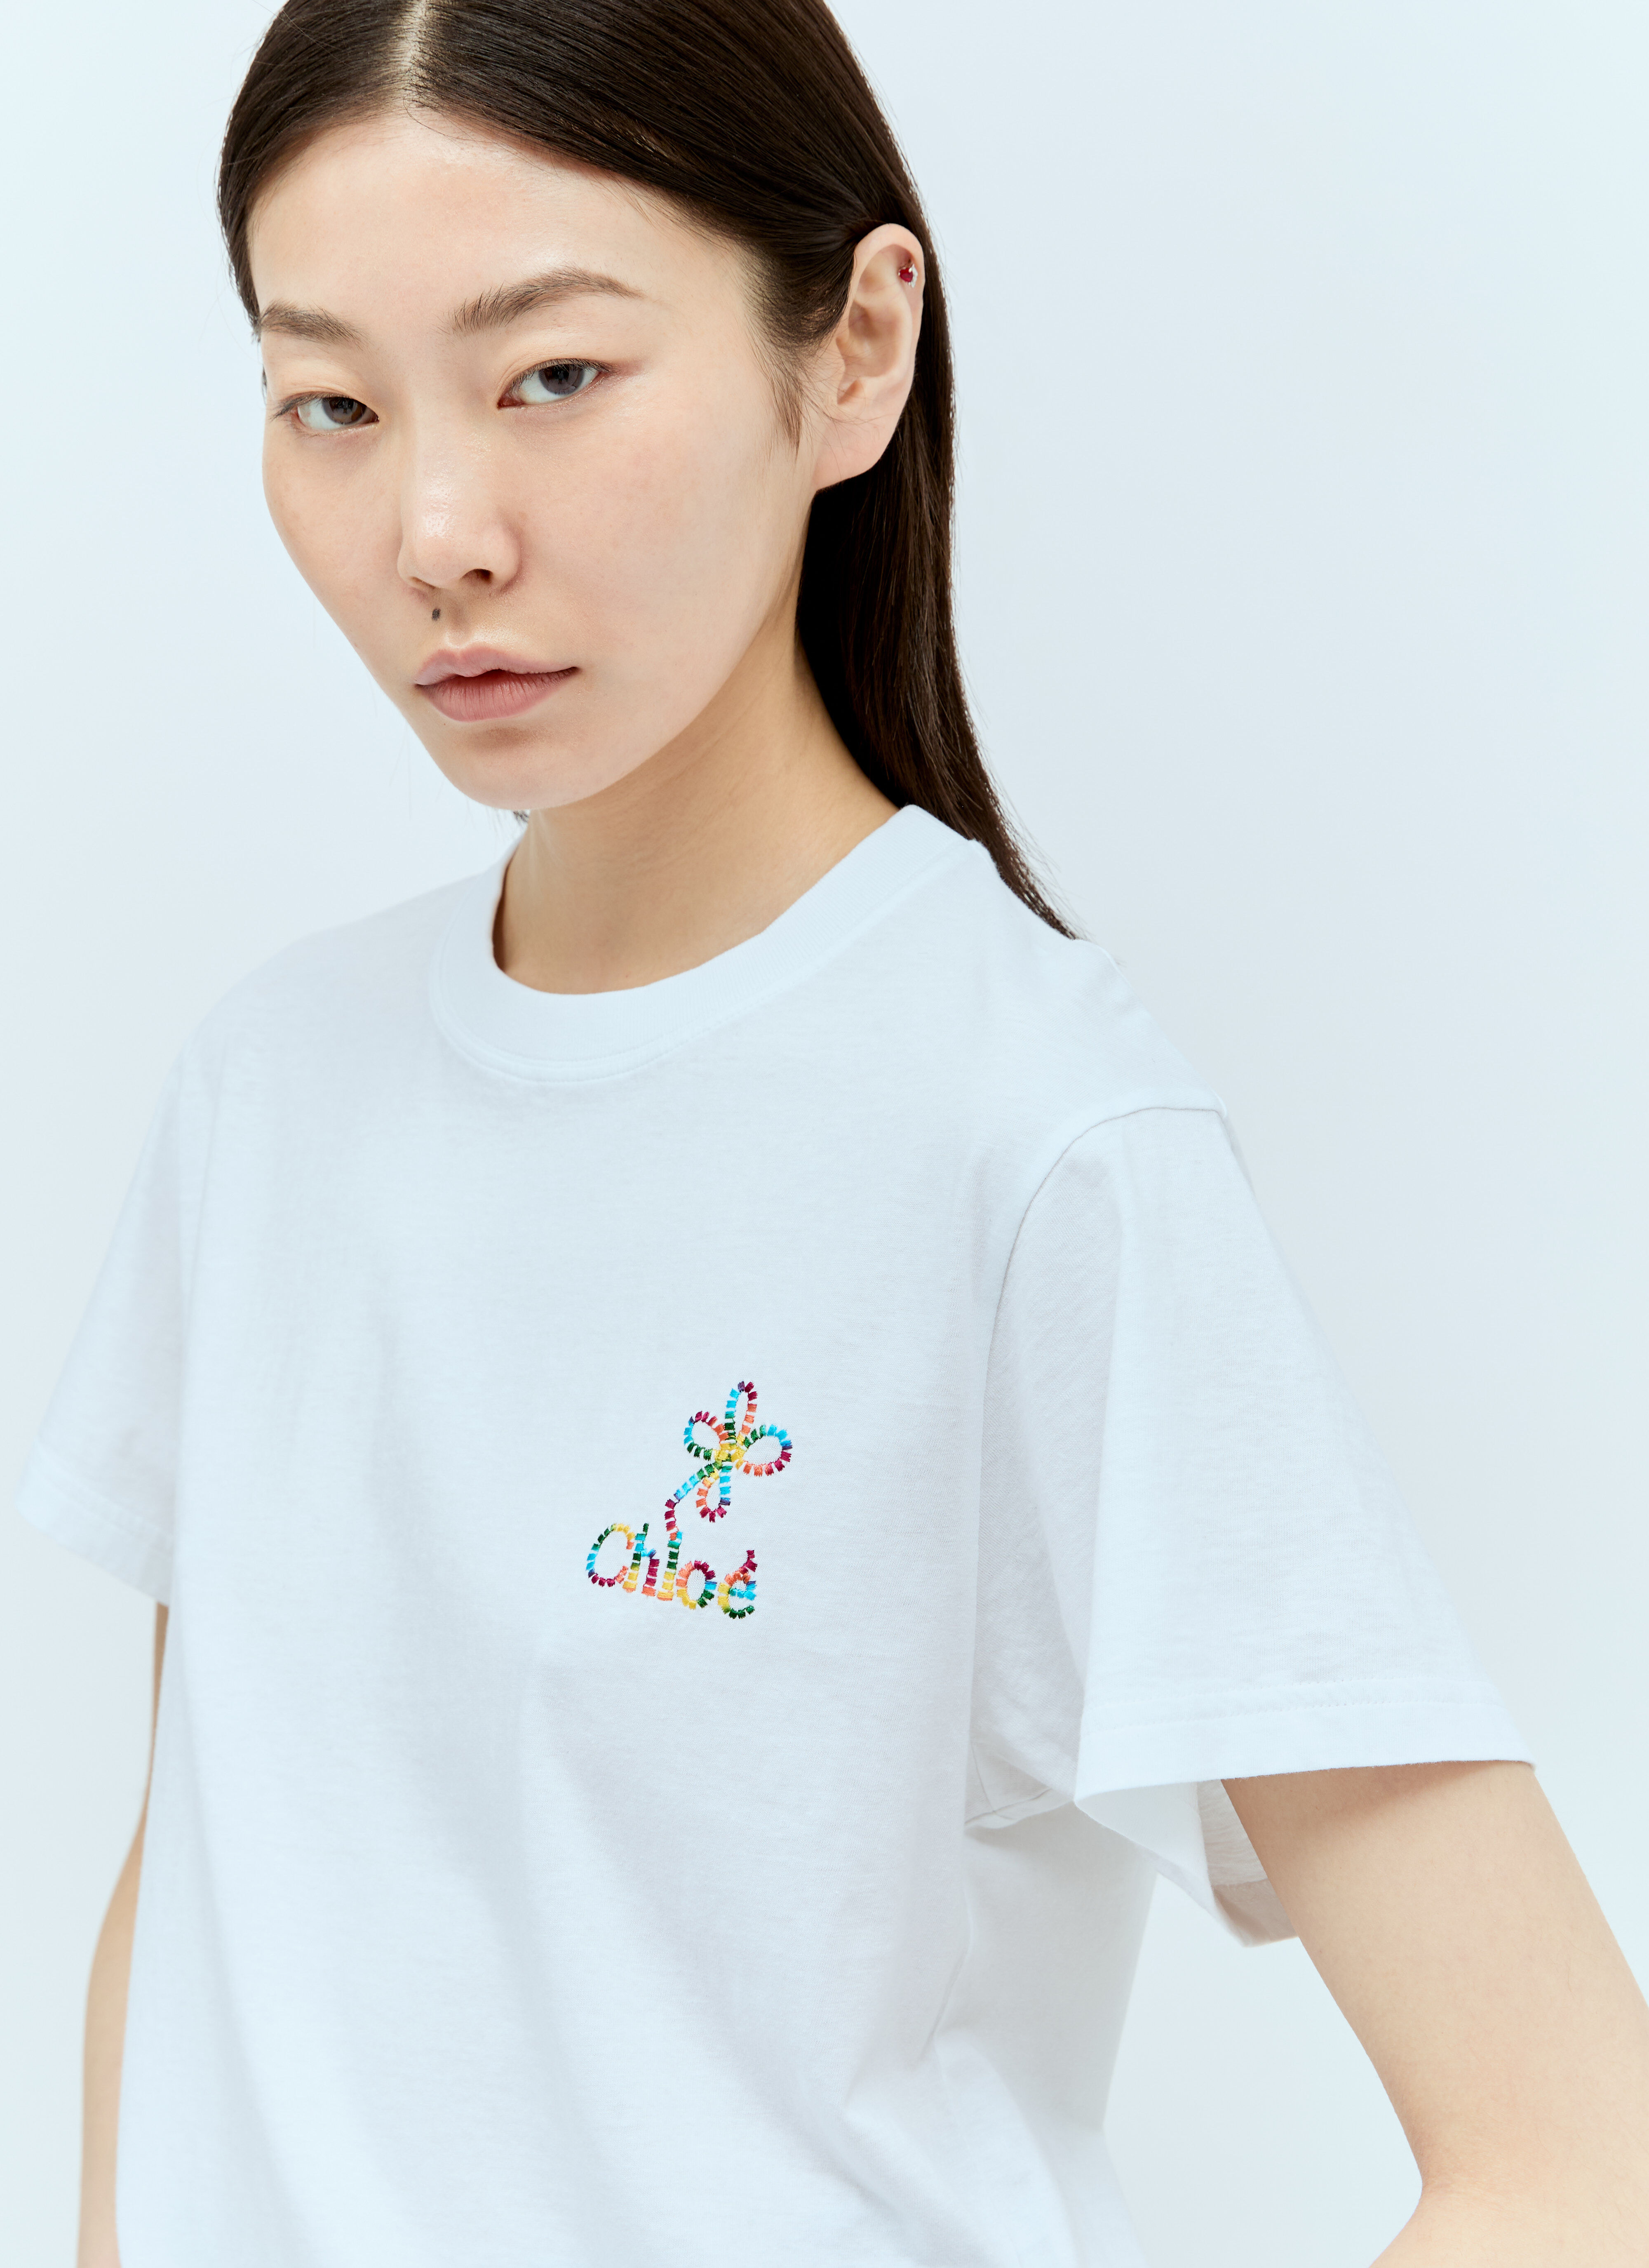 Miu Miu Logo Embroidery T-Shirt Black miu0257002